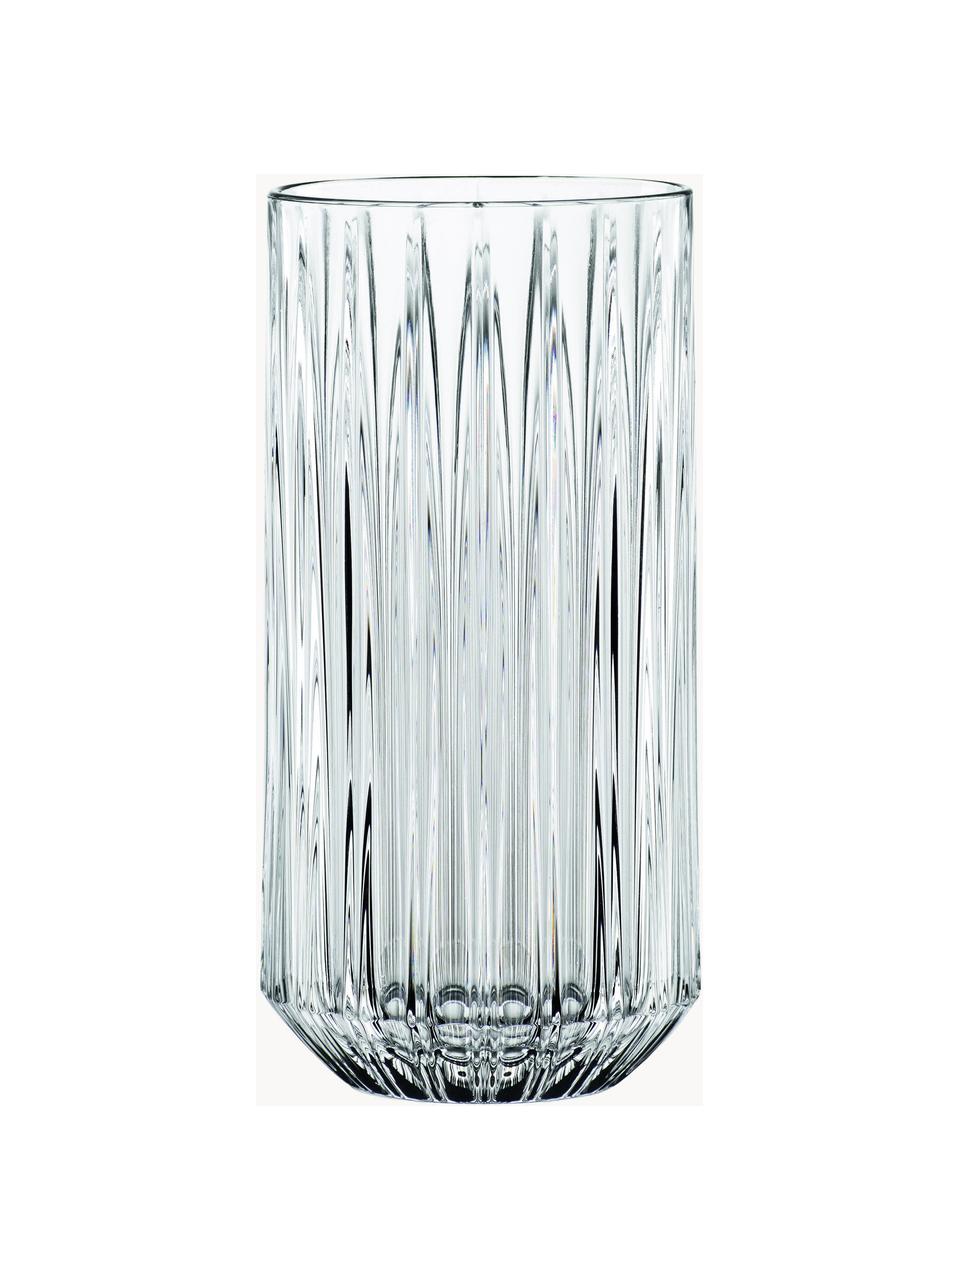 Kristall-Longdrinkgläser Jules, 4 Stück, Kristallglas, Transparent, Ø 7 x H 15 cm, 375 ml